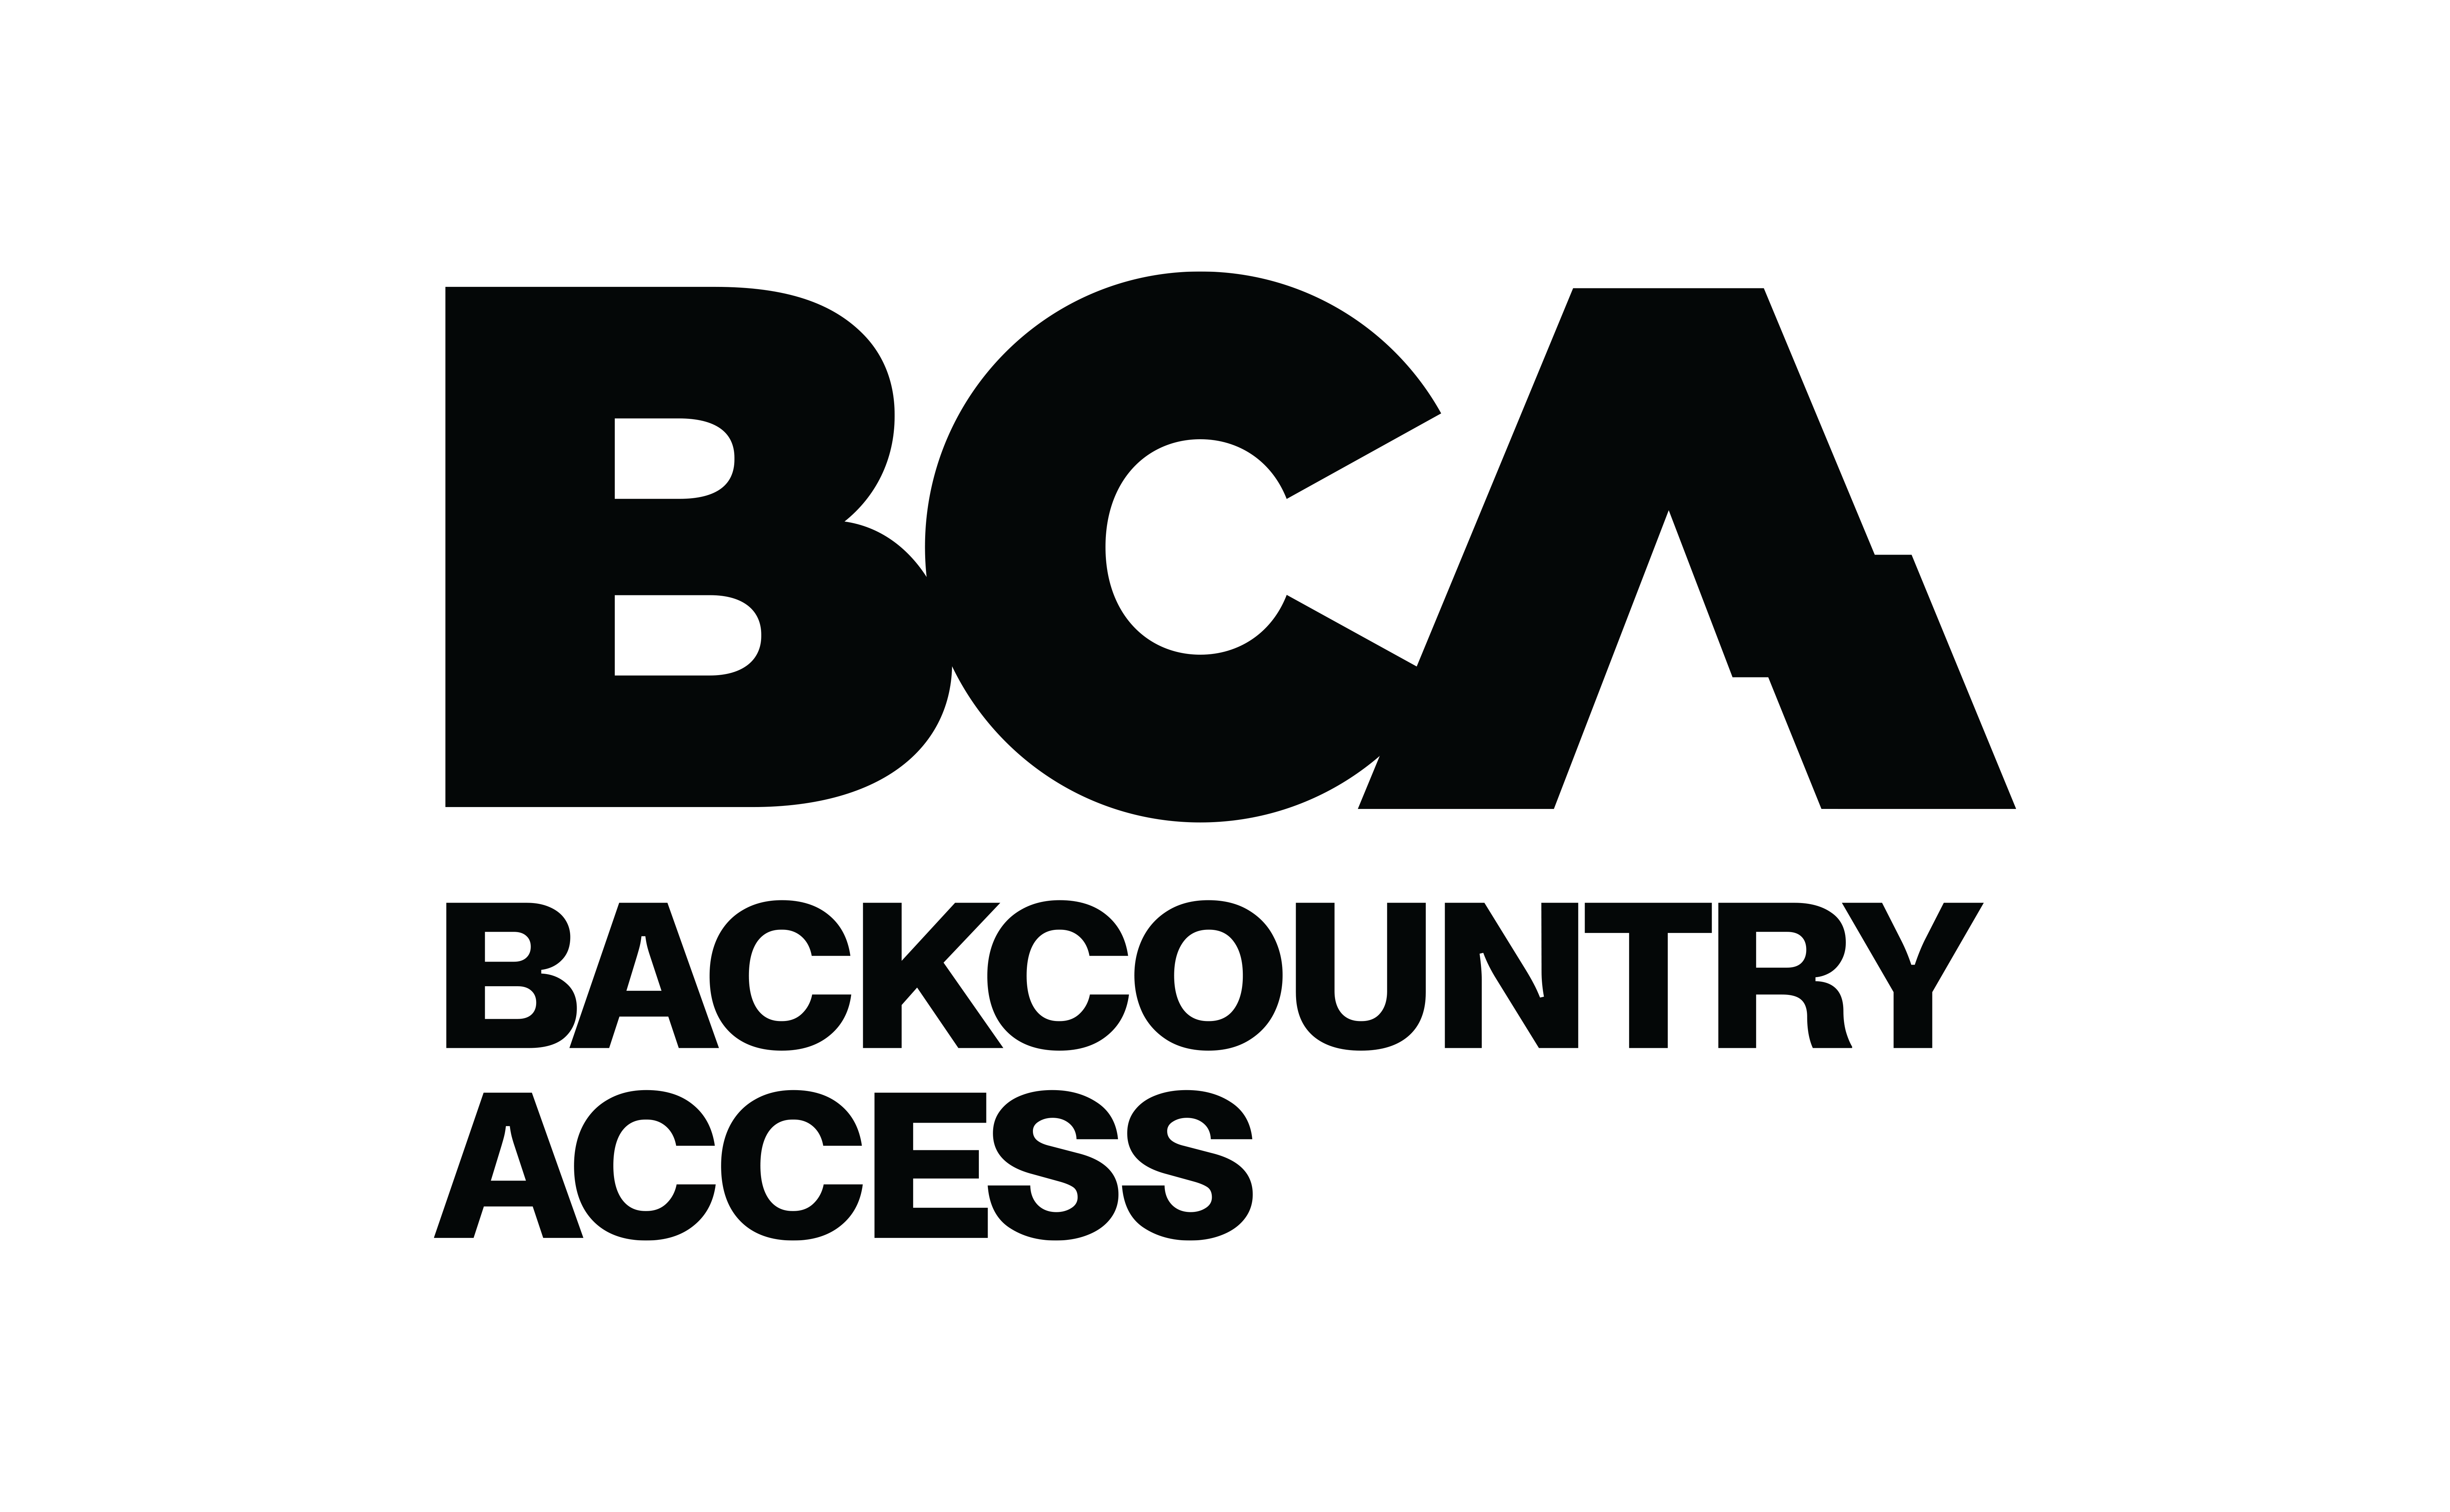 Backcountry Access